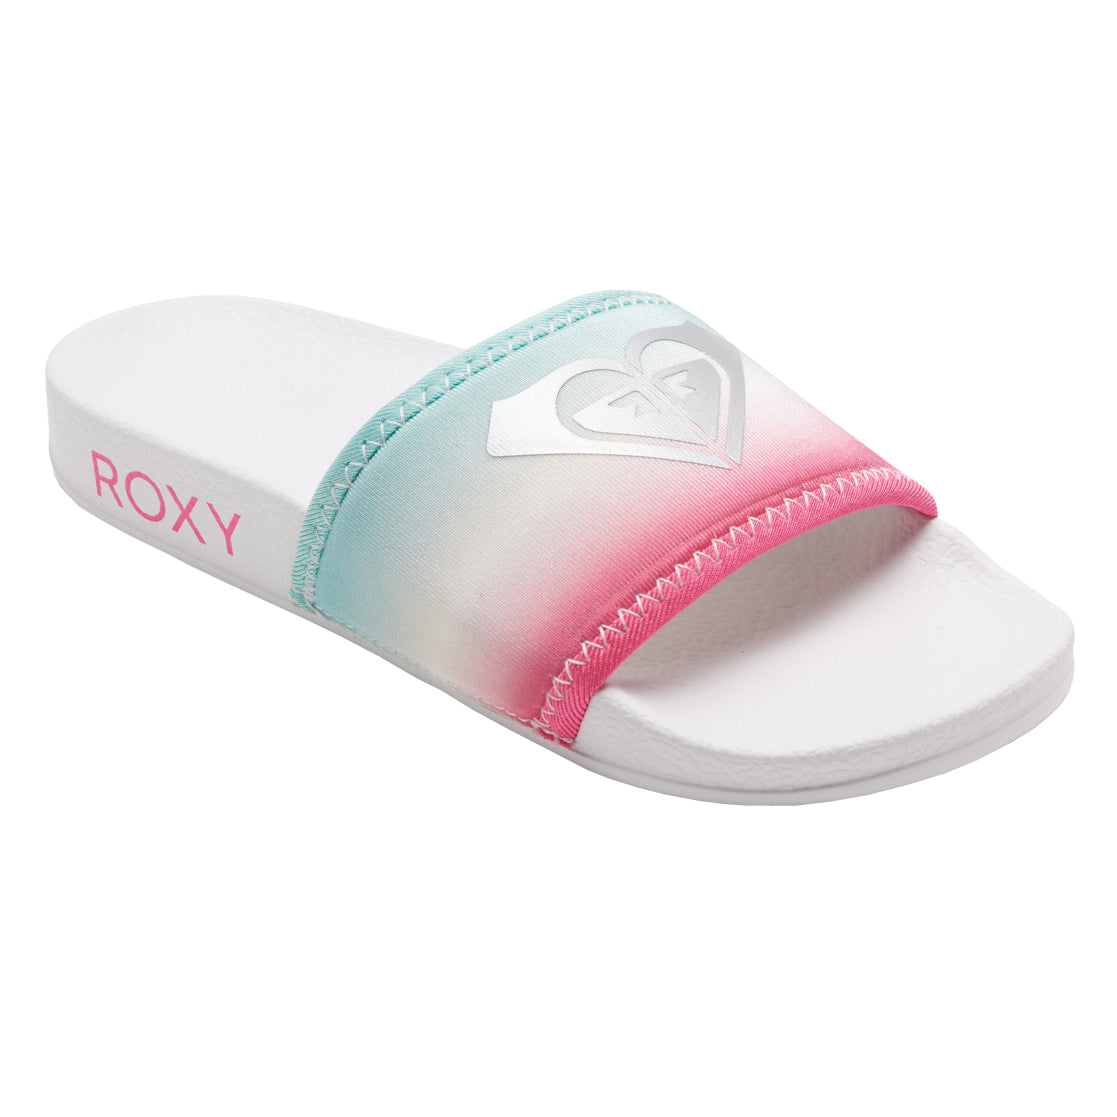 Roxy Slippy Neo Girls Sandal WCQ-White-Crazy Pink-Turquoise 11 C